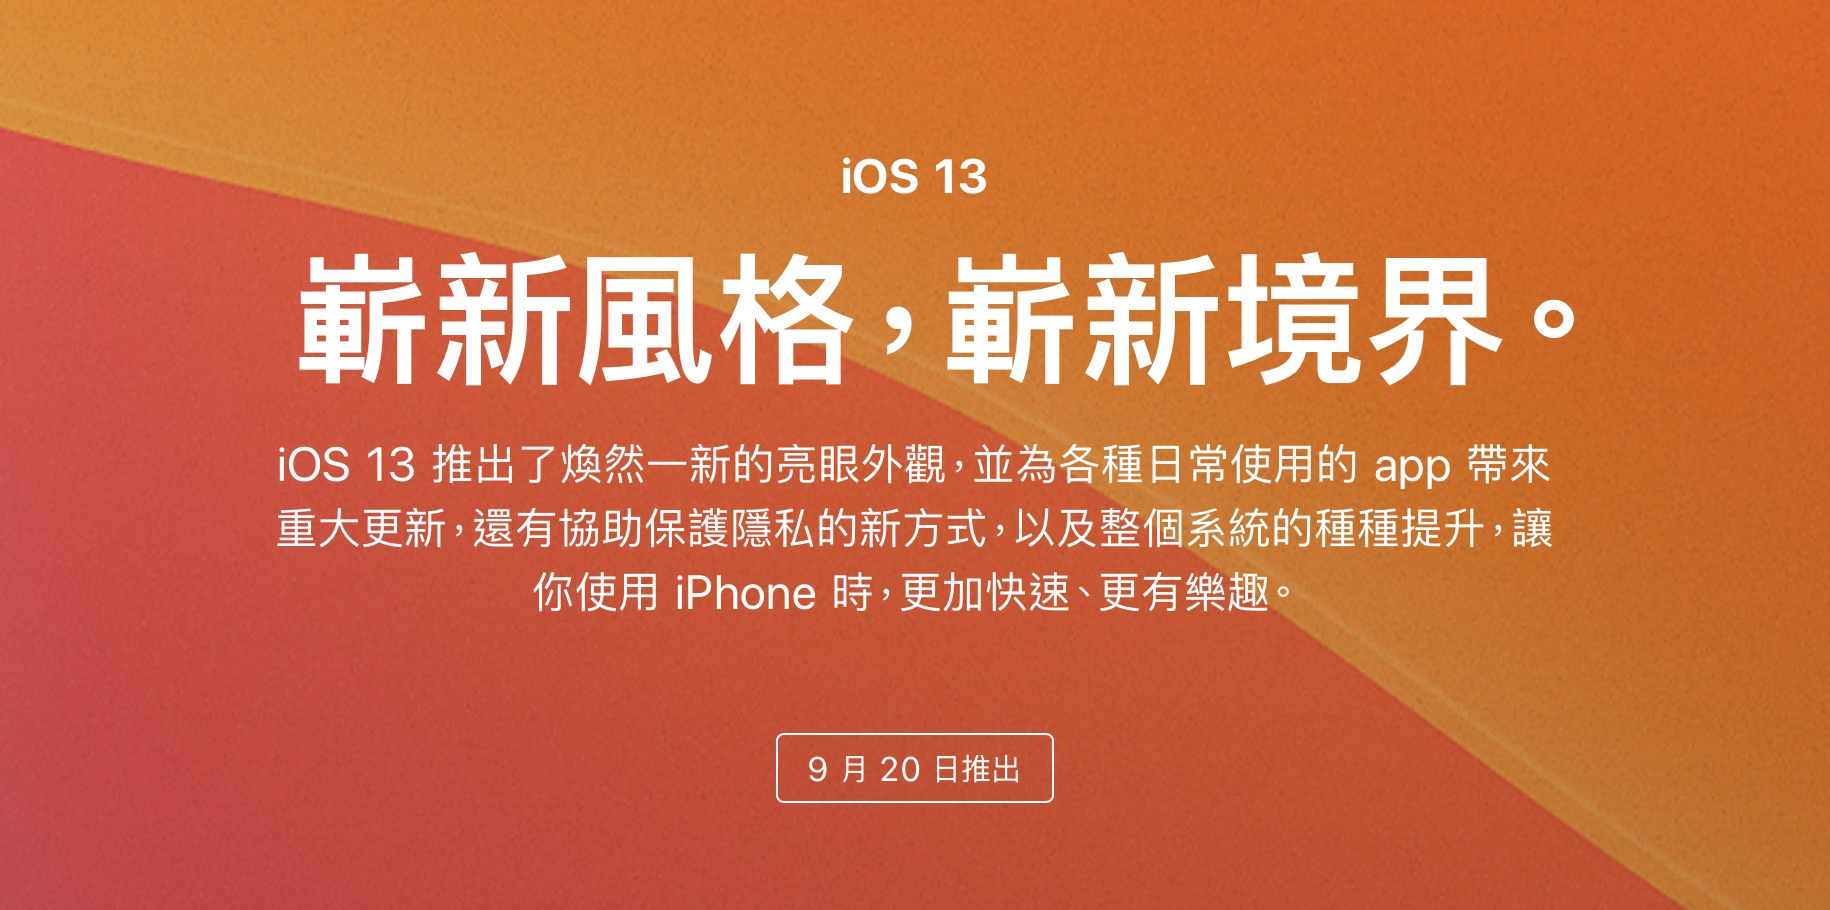 更新 iOS 13